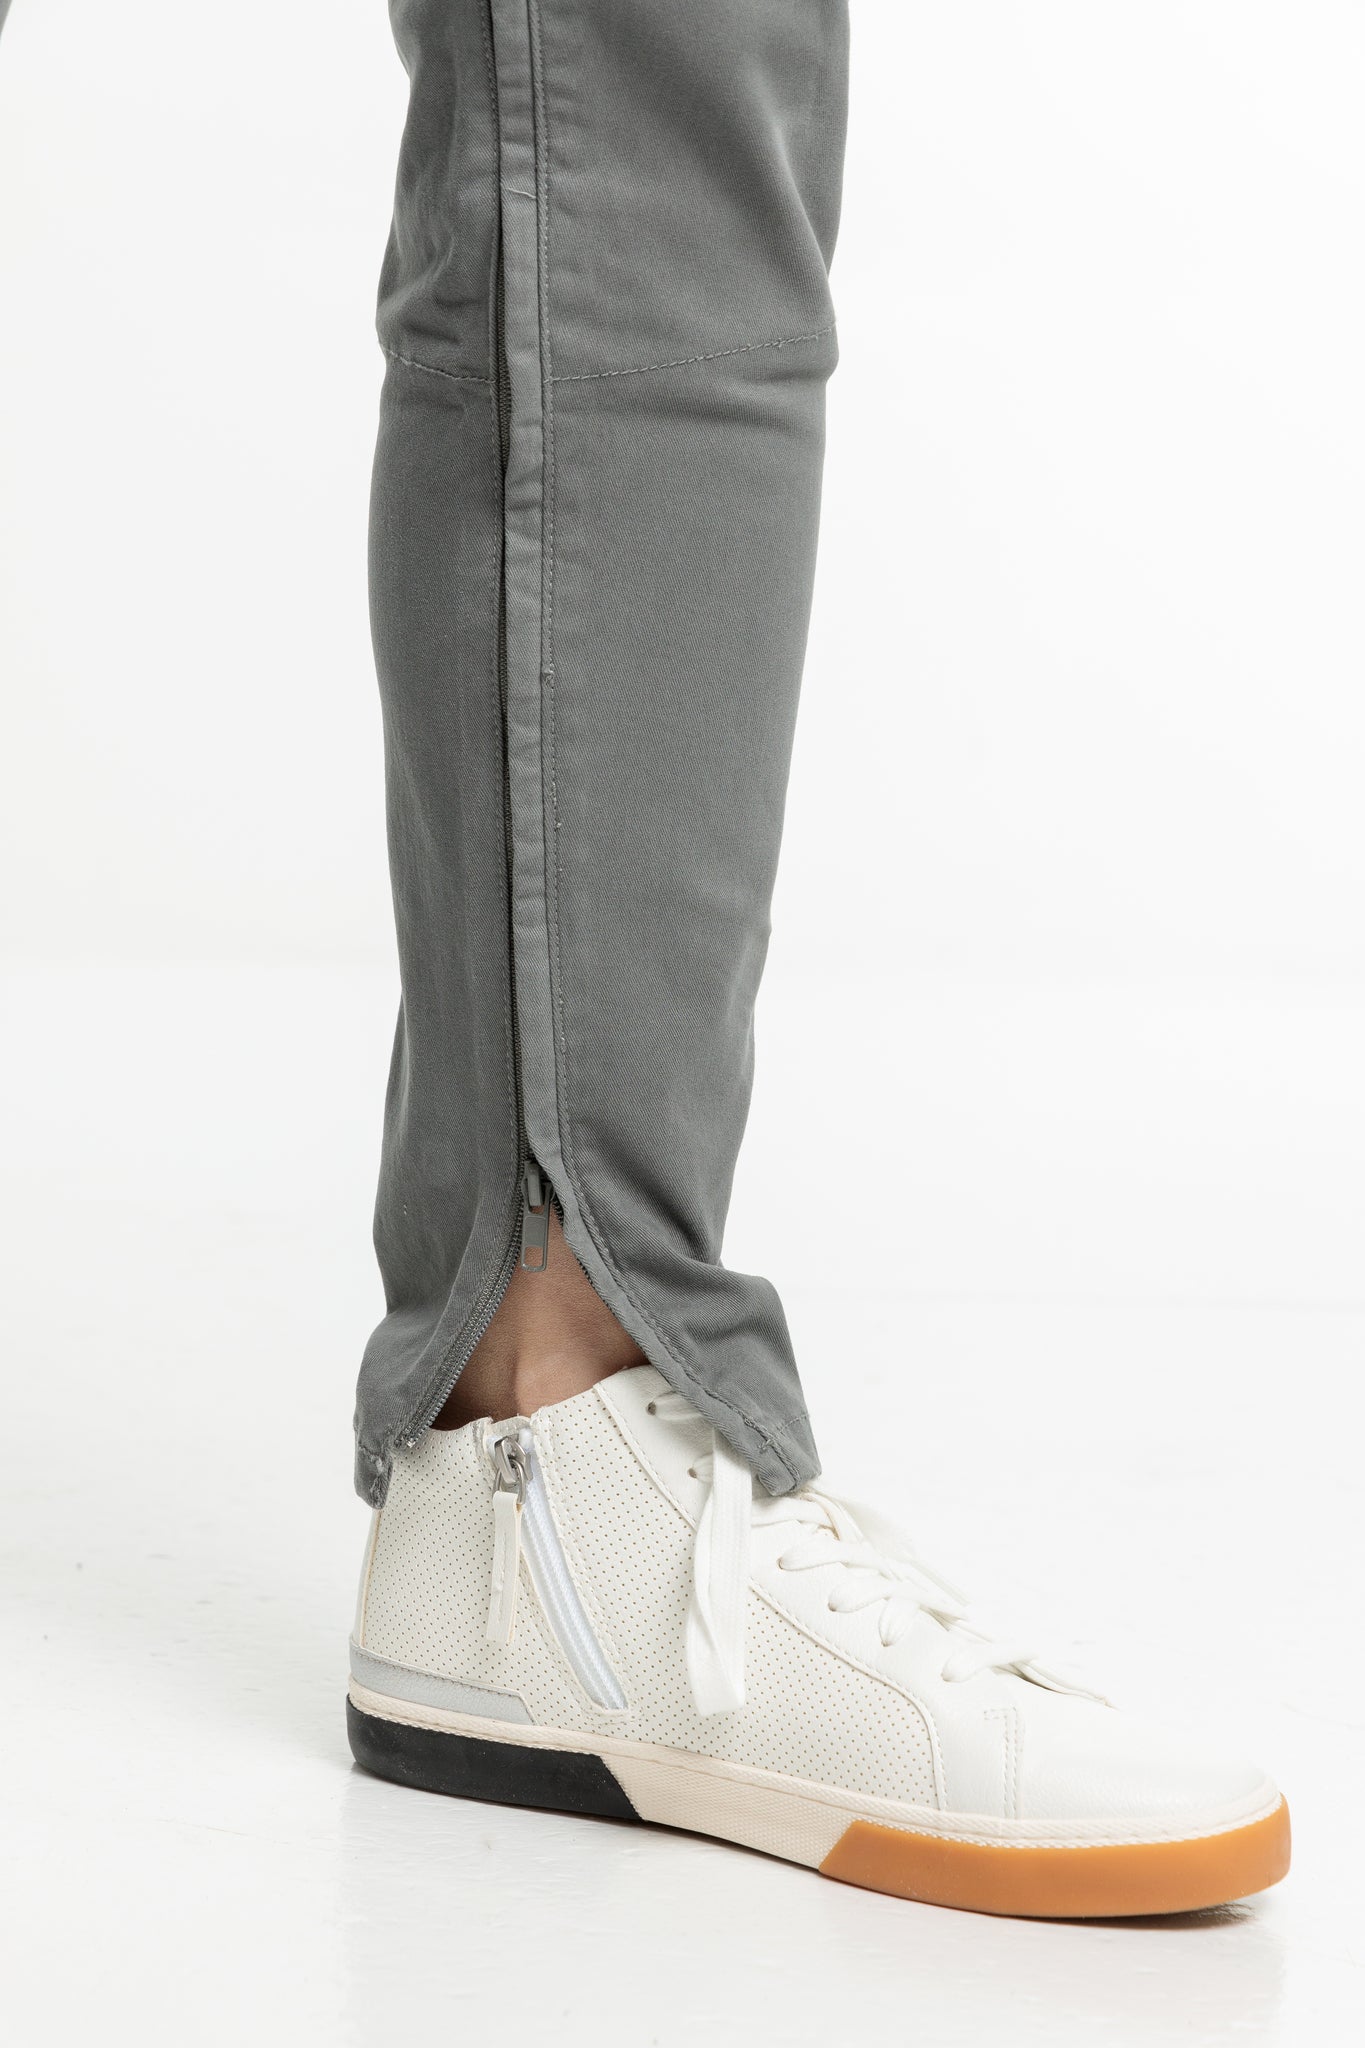 Women's Amp Pant Grey